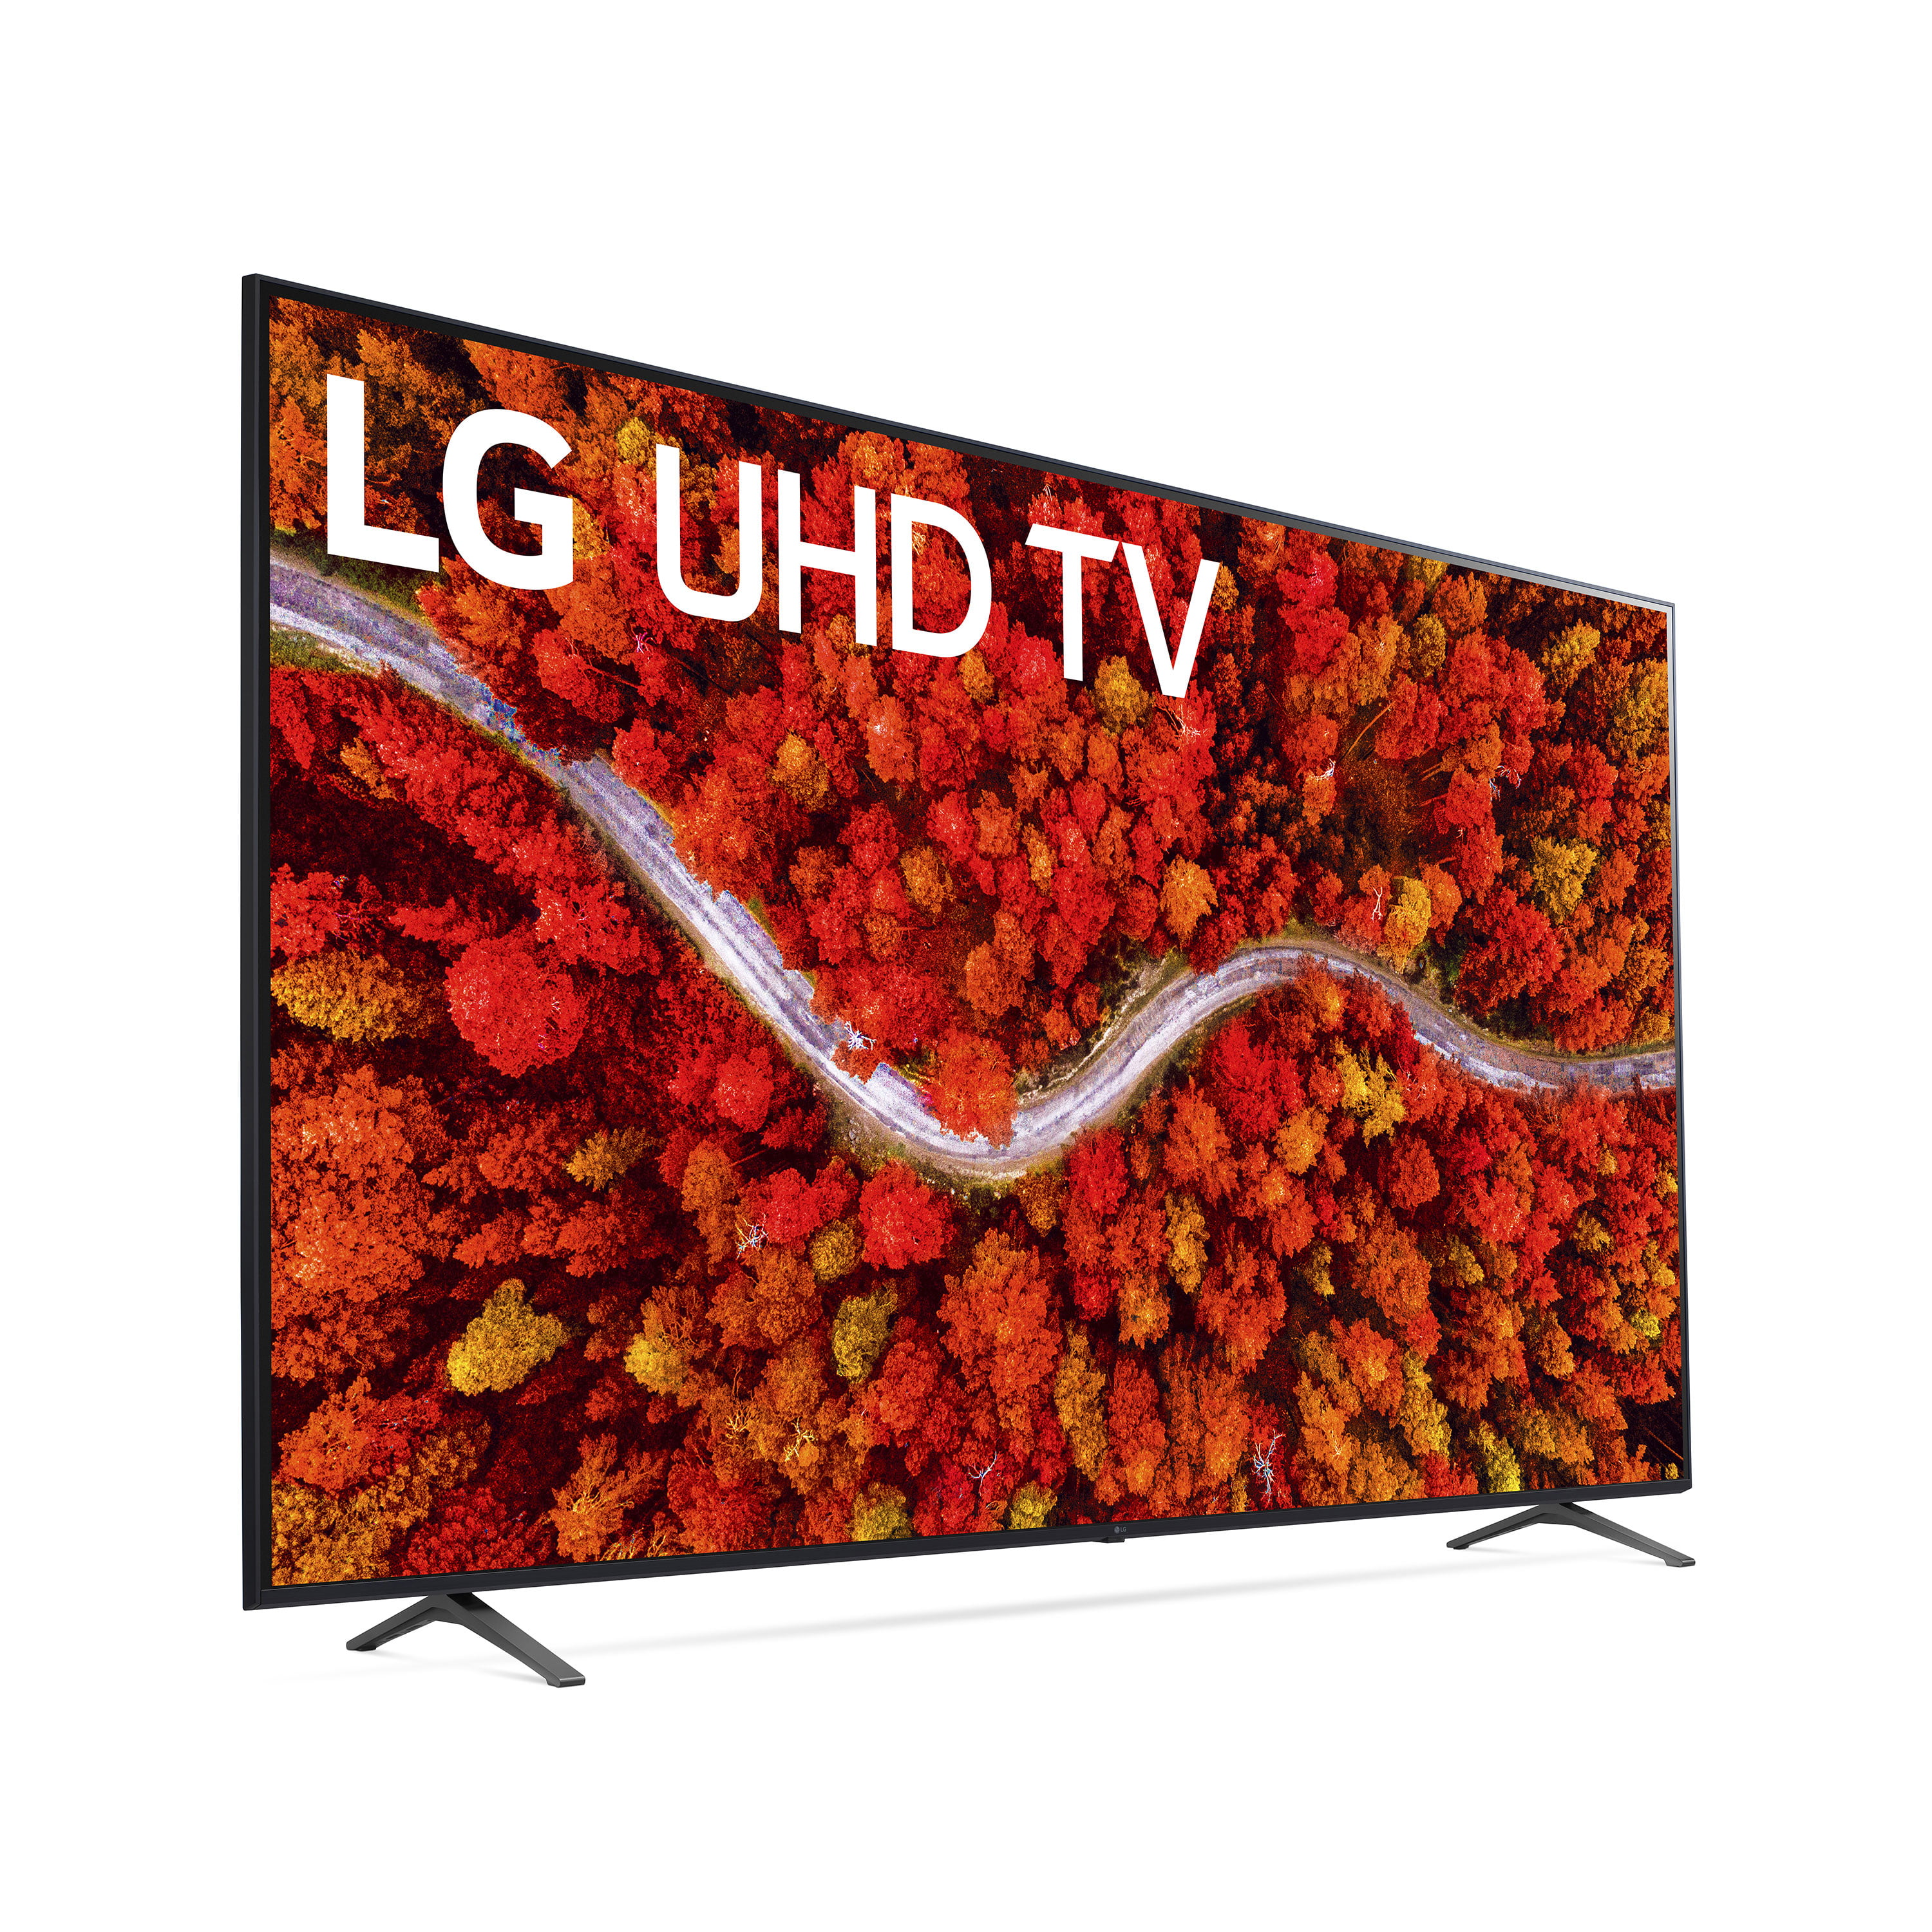 LG UHD 80 Series 75 inch Class 4K Smart UHD TV with AI ThinQ